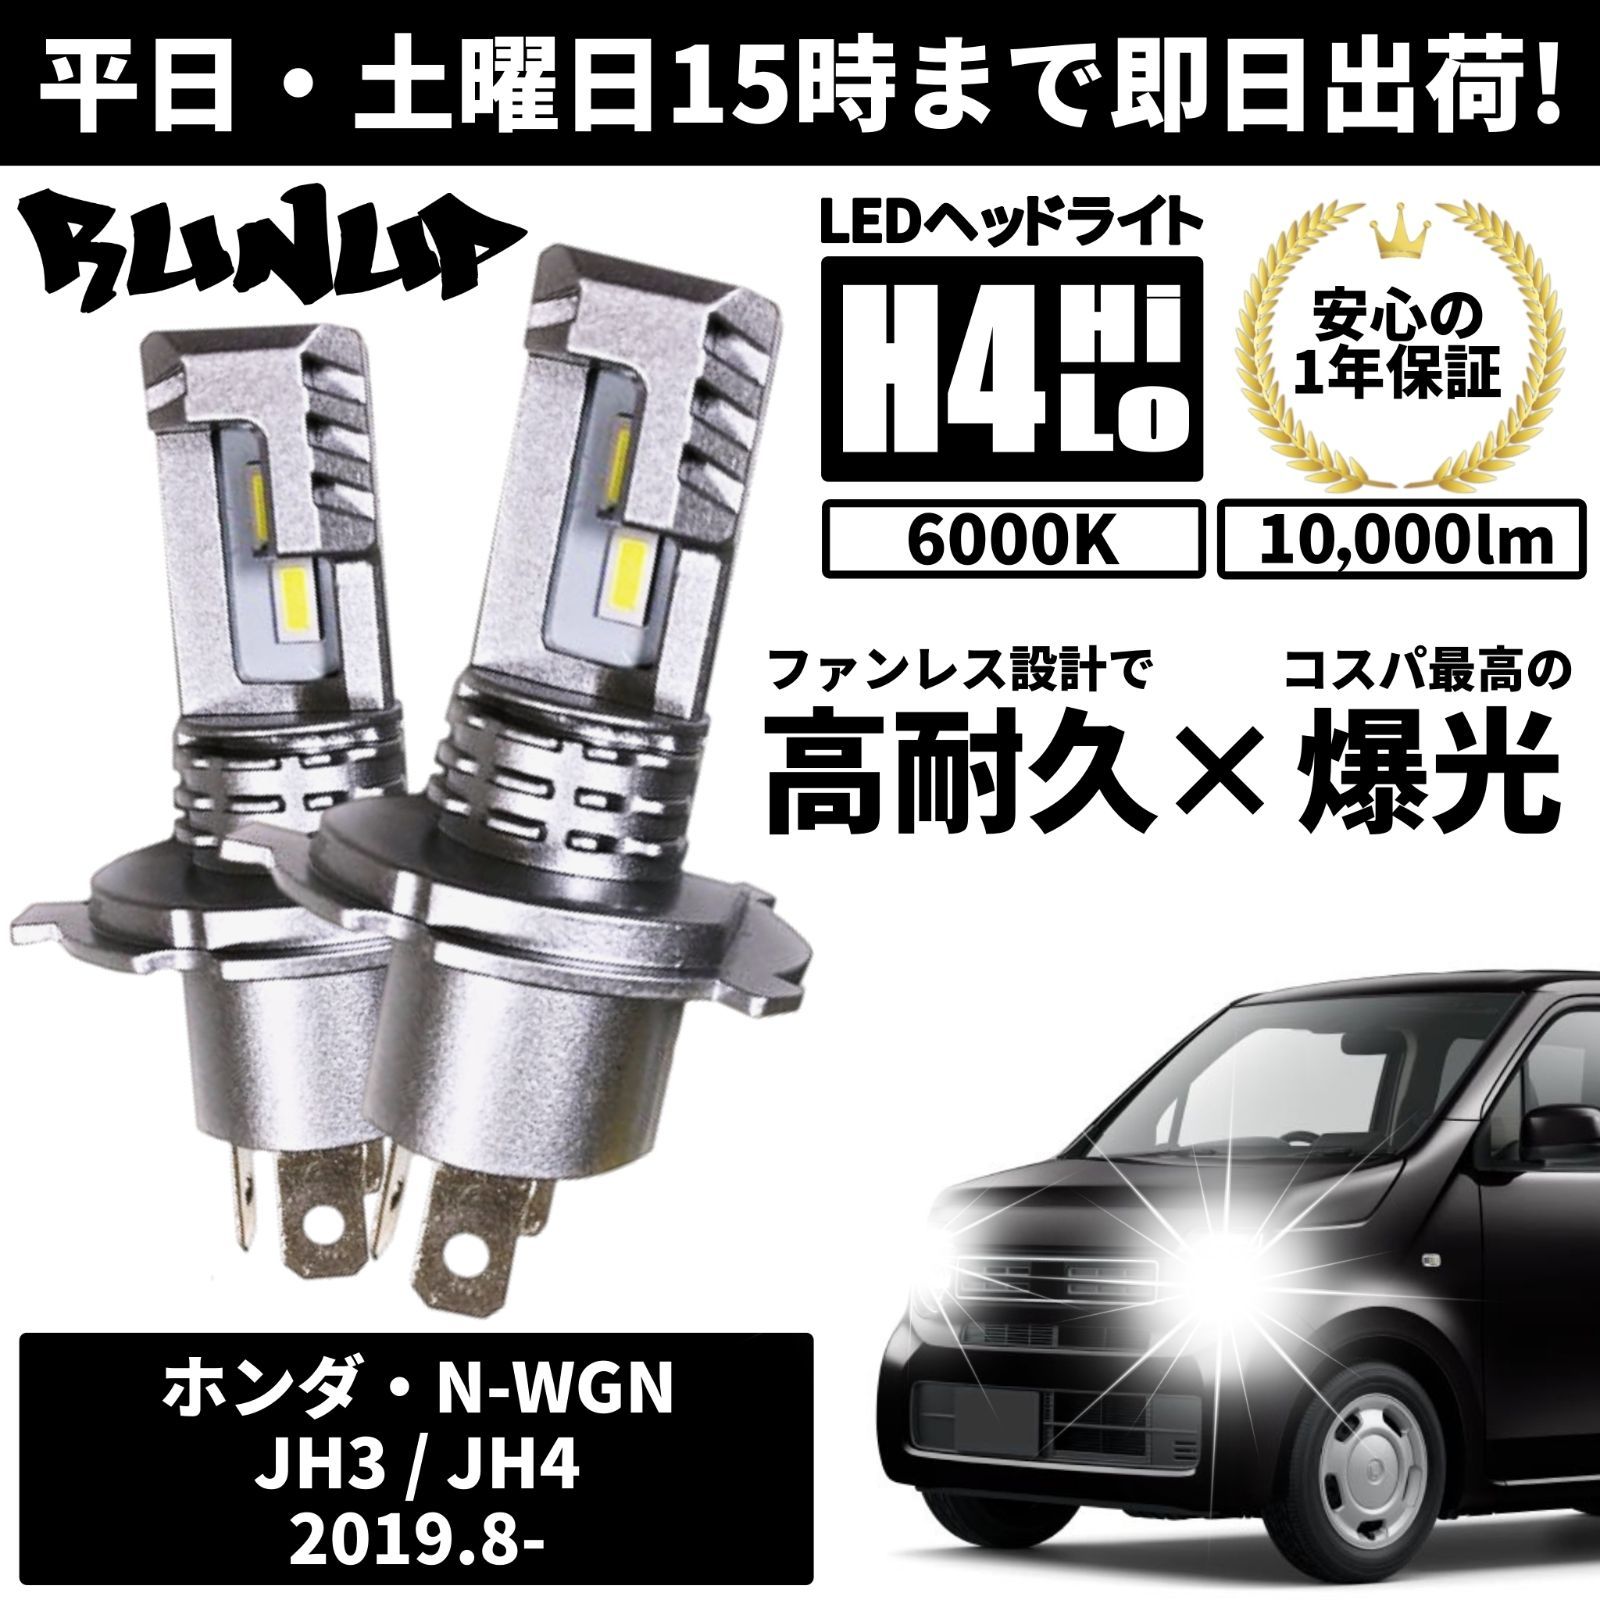 T16 バックランプ LEDバルブ 爆光 ホンダ N-WGN (JH3 JH4) 対応 LED monster 1400lm ホワイト 6500K  2個 後退灯 11-H-1